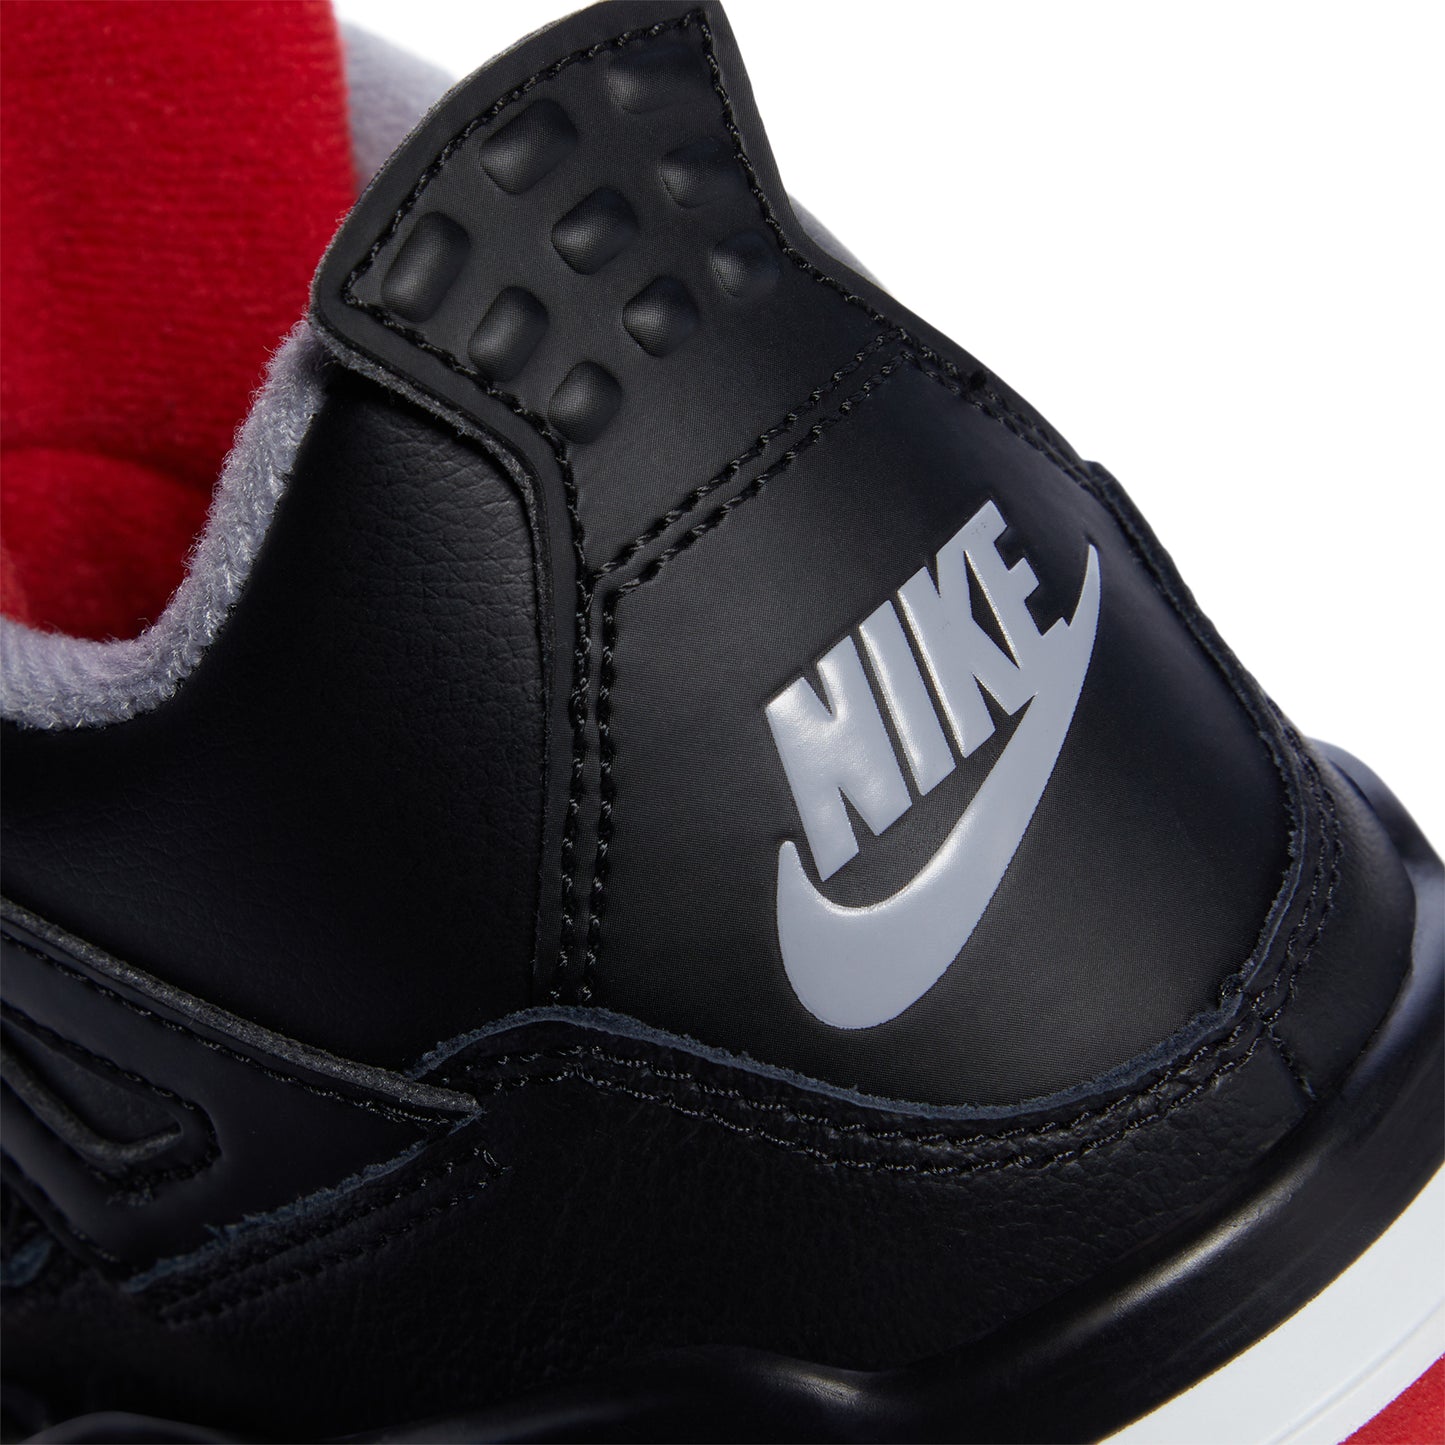 Nike Little Kids Jordan 4 Retro (Black/Fire Red/Cement Grey/Summit White)